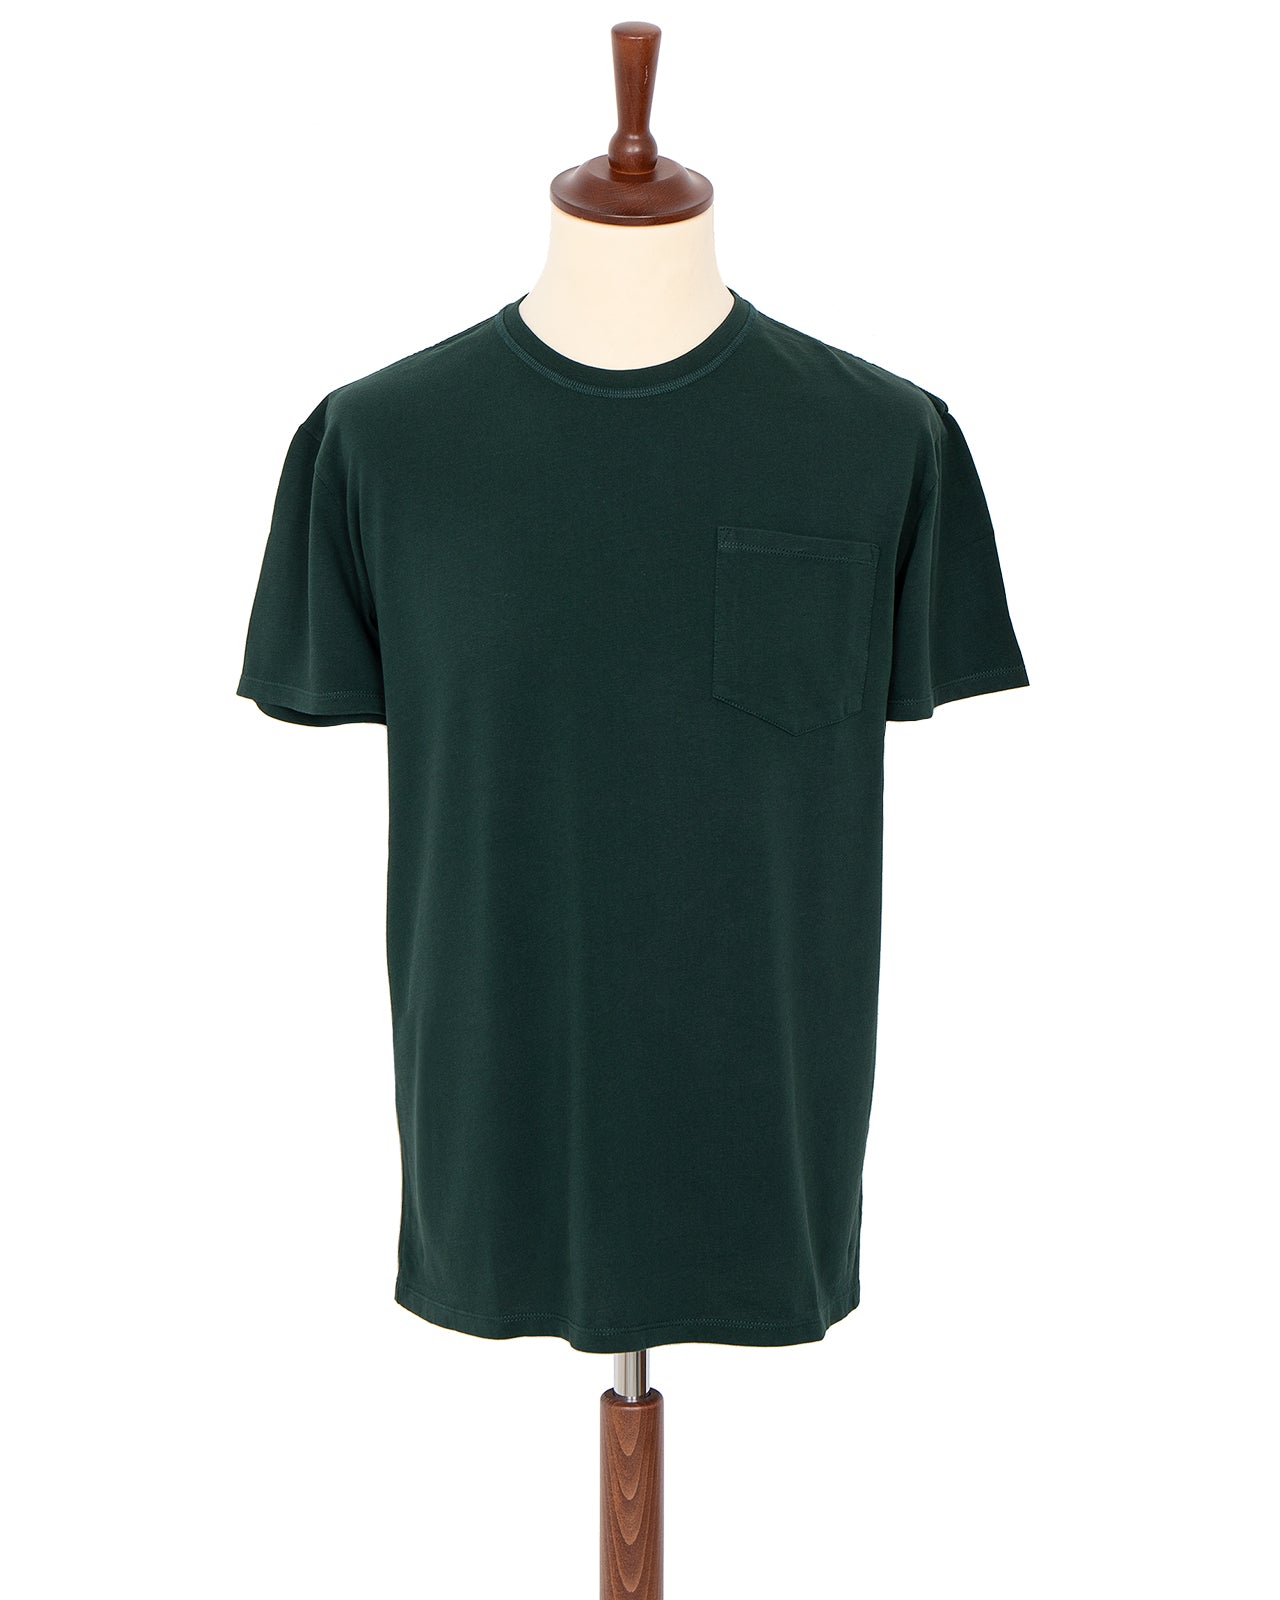 Indigofera Wilson T-Shirt, Phthalo Green